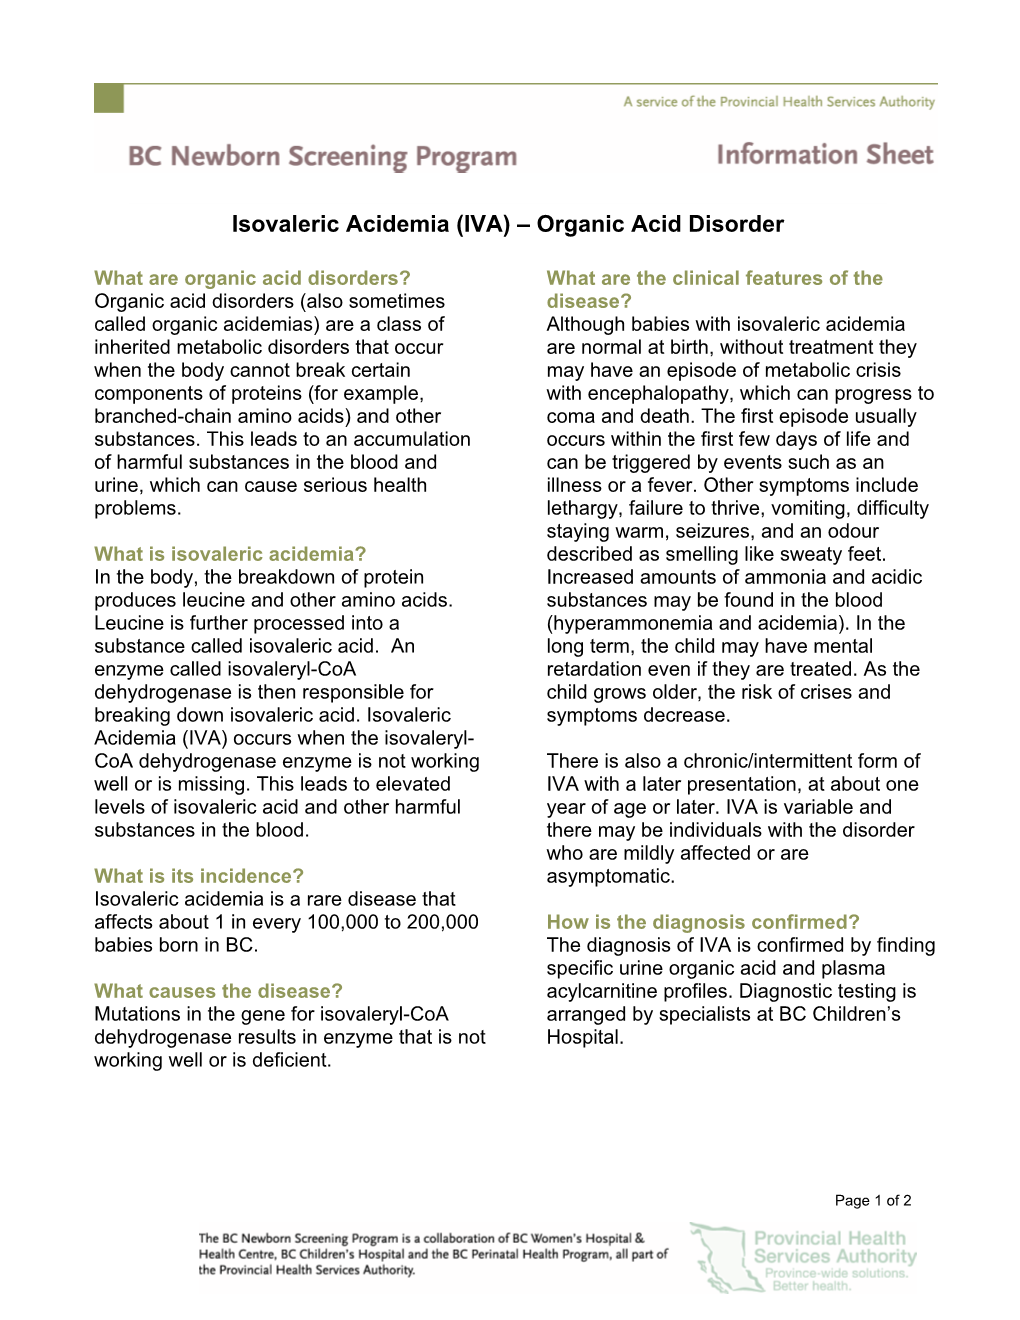 Isovaleric Acidemia (IVA) – Organic Acid Disorder